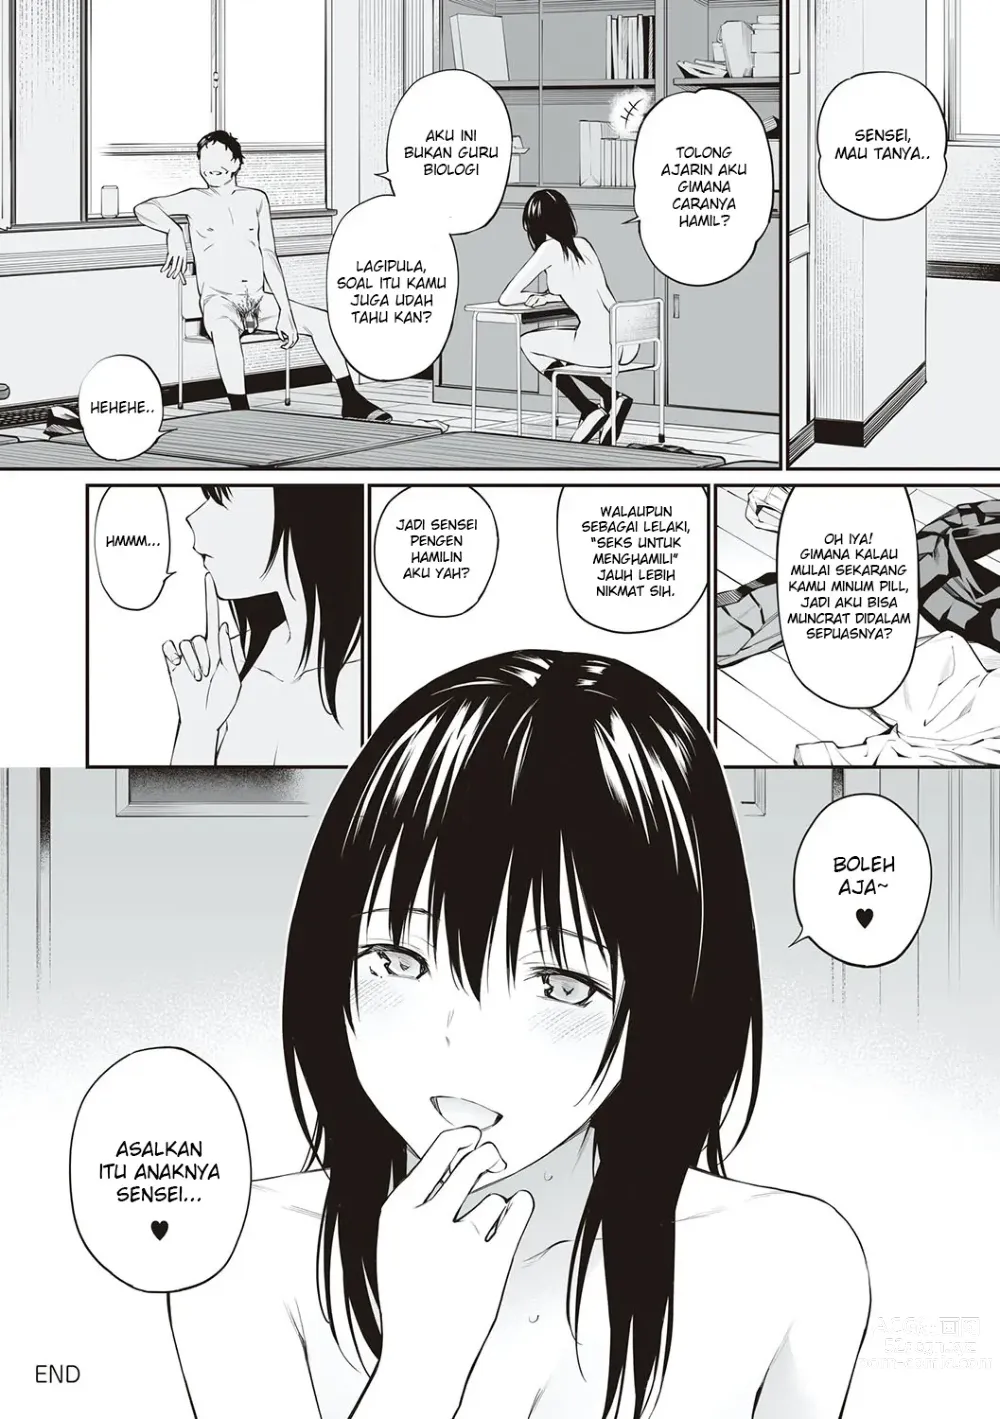 Page 38 of manga Asalkan sama Sensei